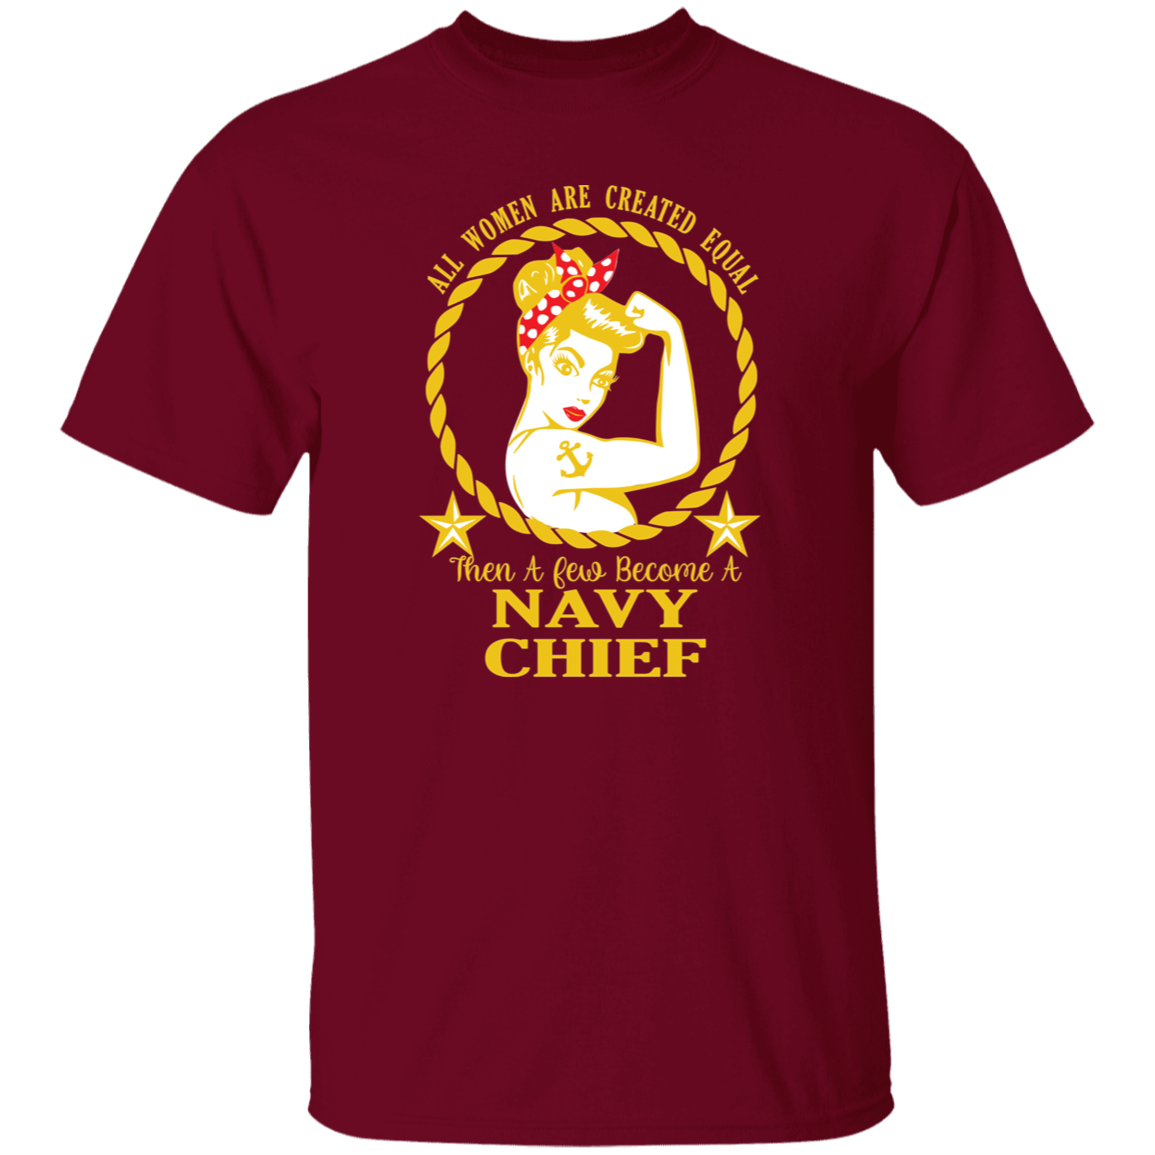 Navy Girl V2 5.3 oz. T-Shirt